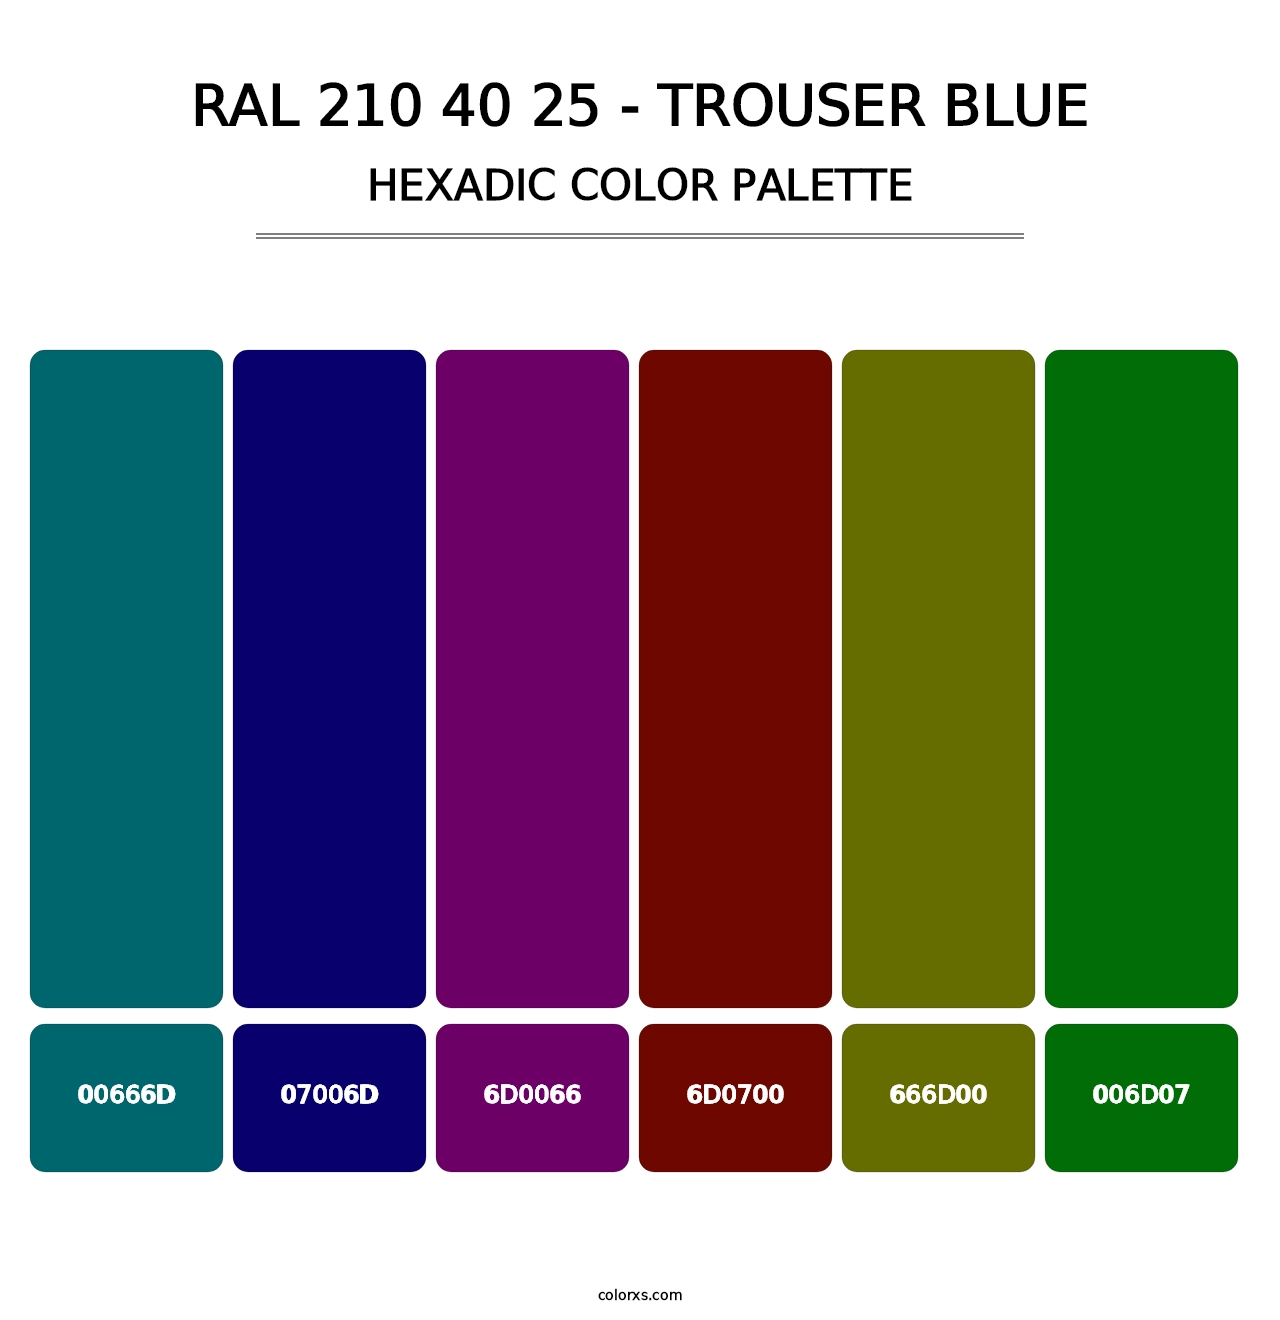 RAL 210 40 25 - Trouser Blue - Hexadic Color Palette